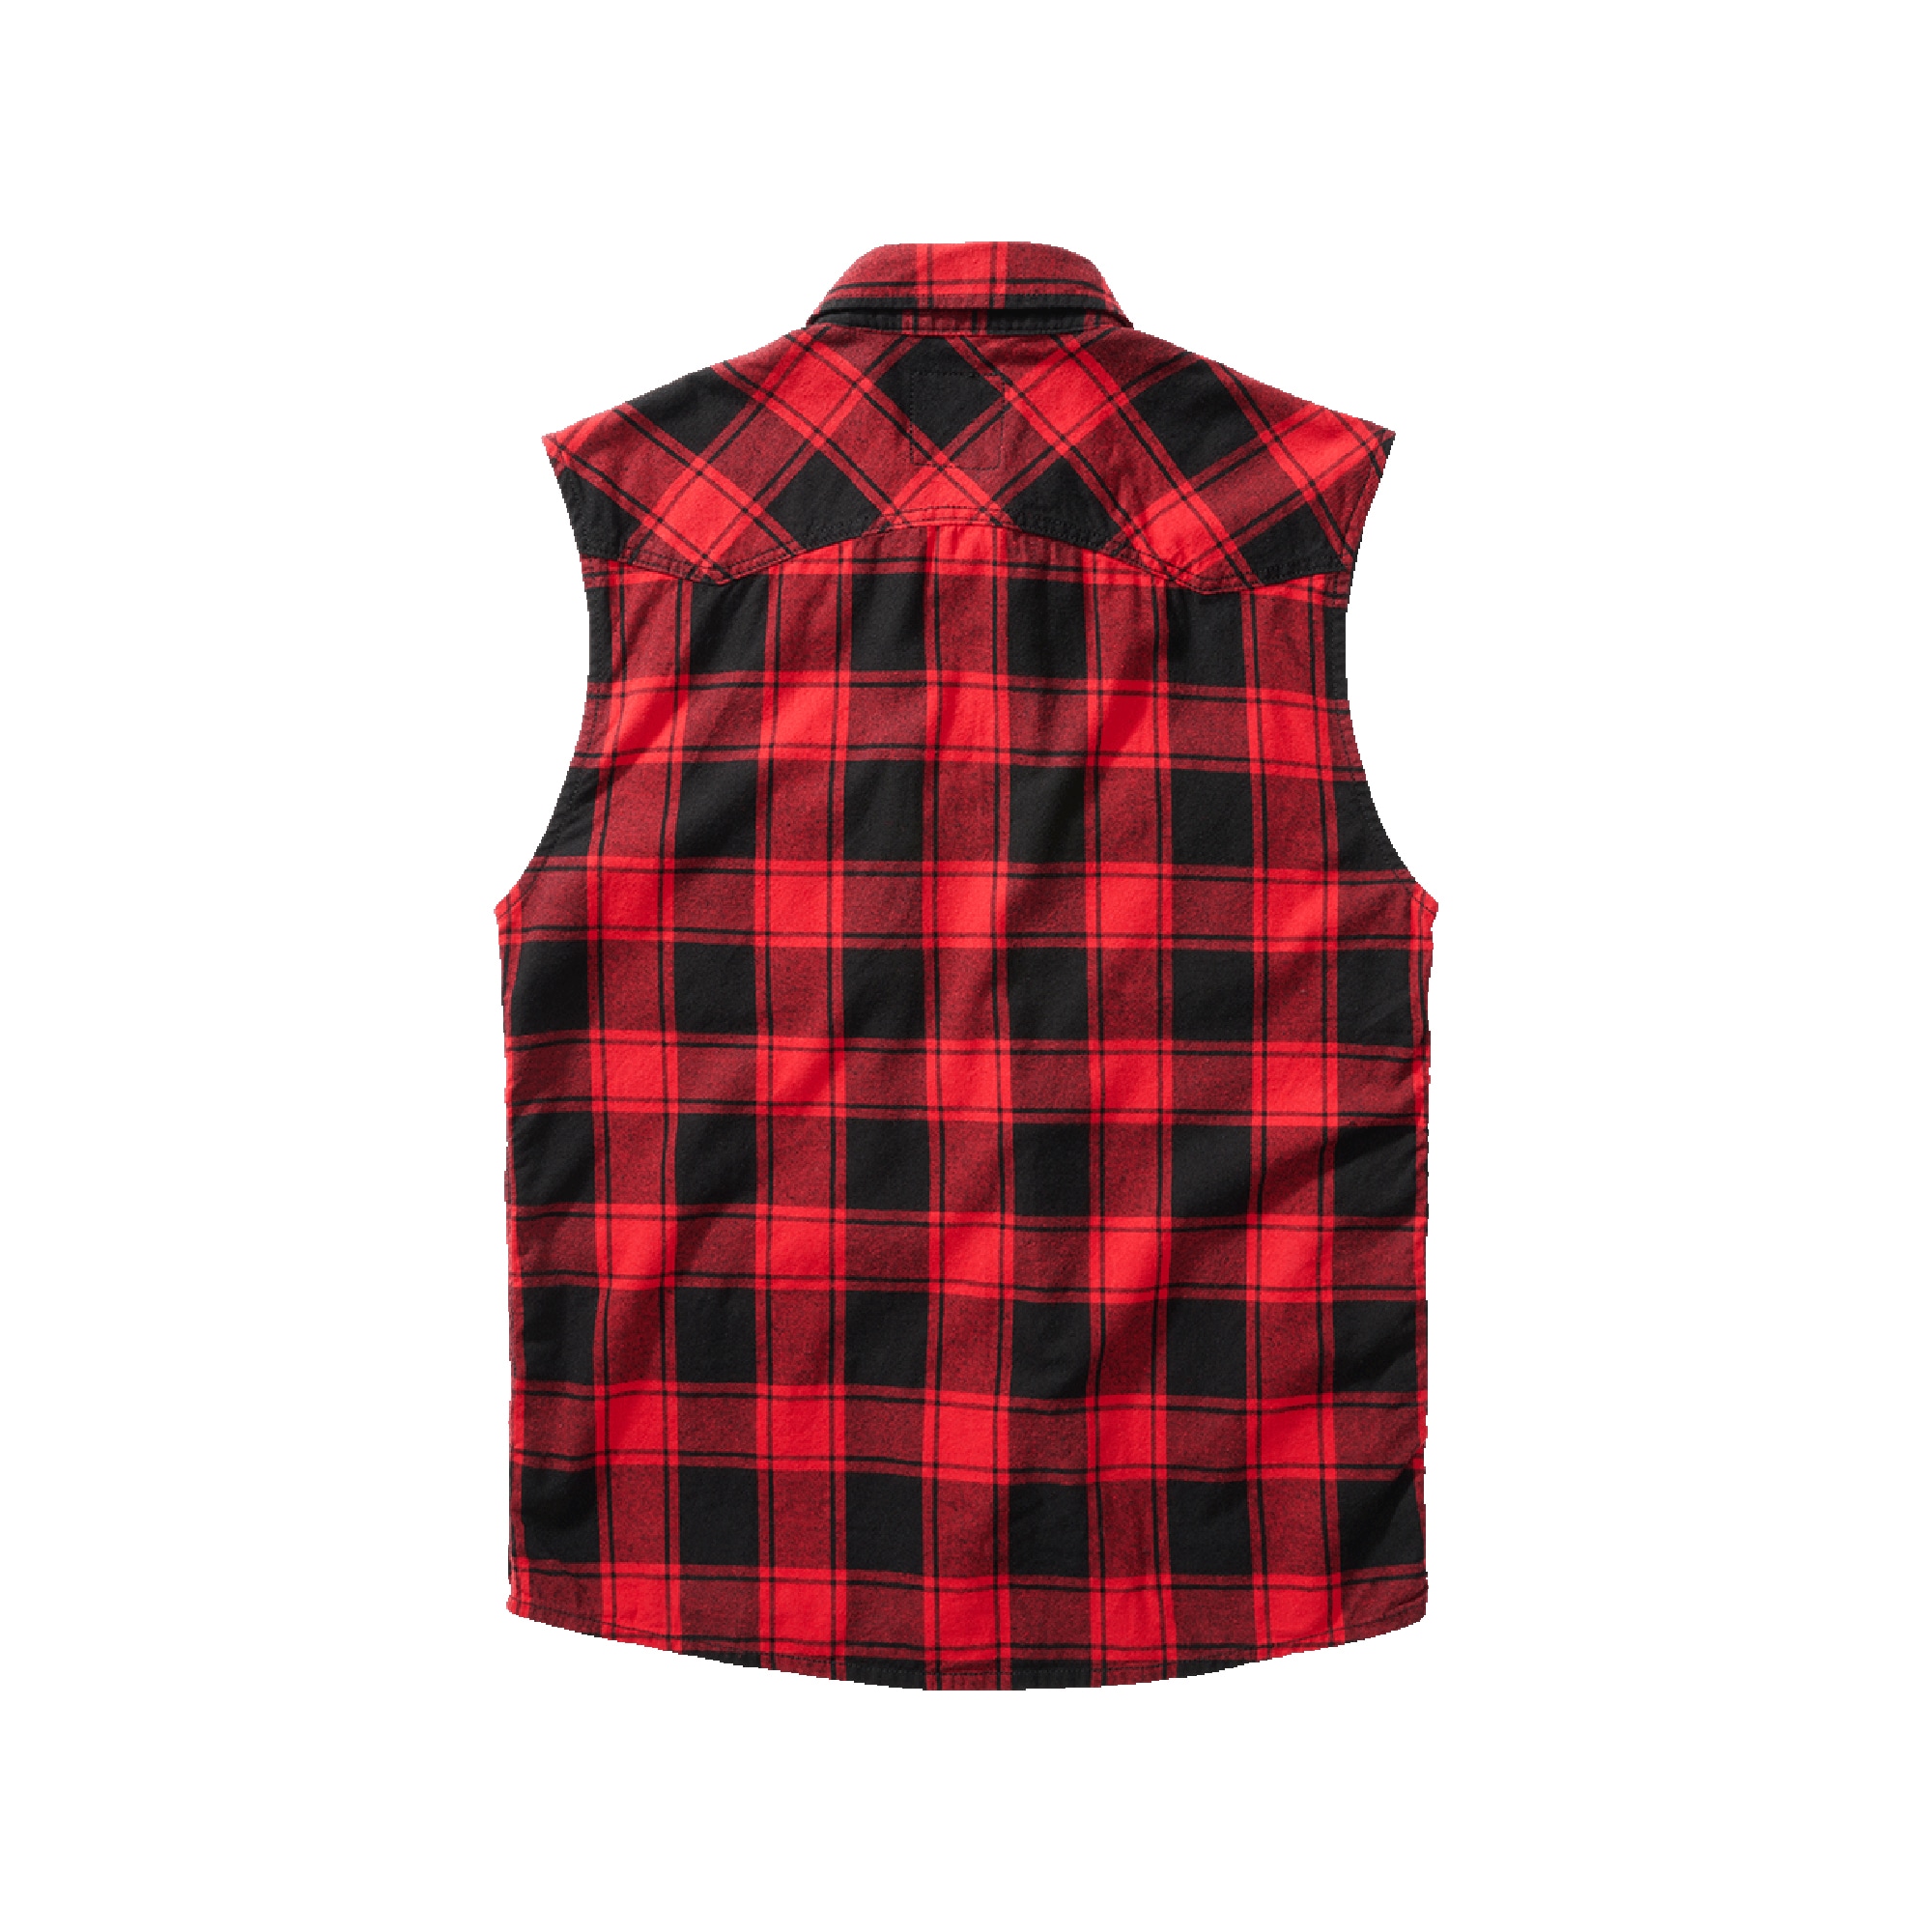 by Sleeveless red/black Purchase Check Brandit the Shirt ASMC